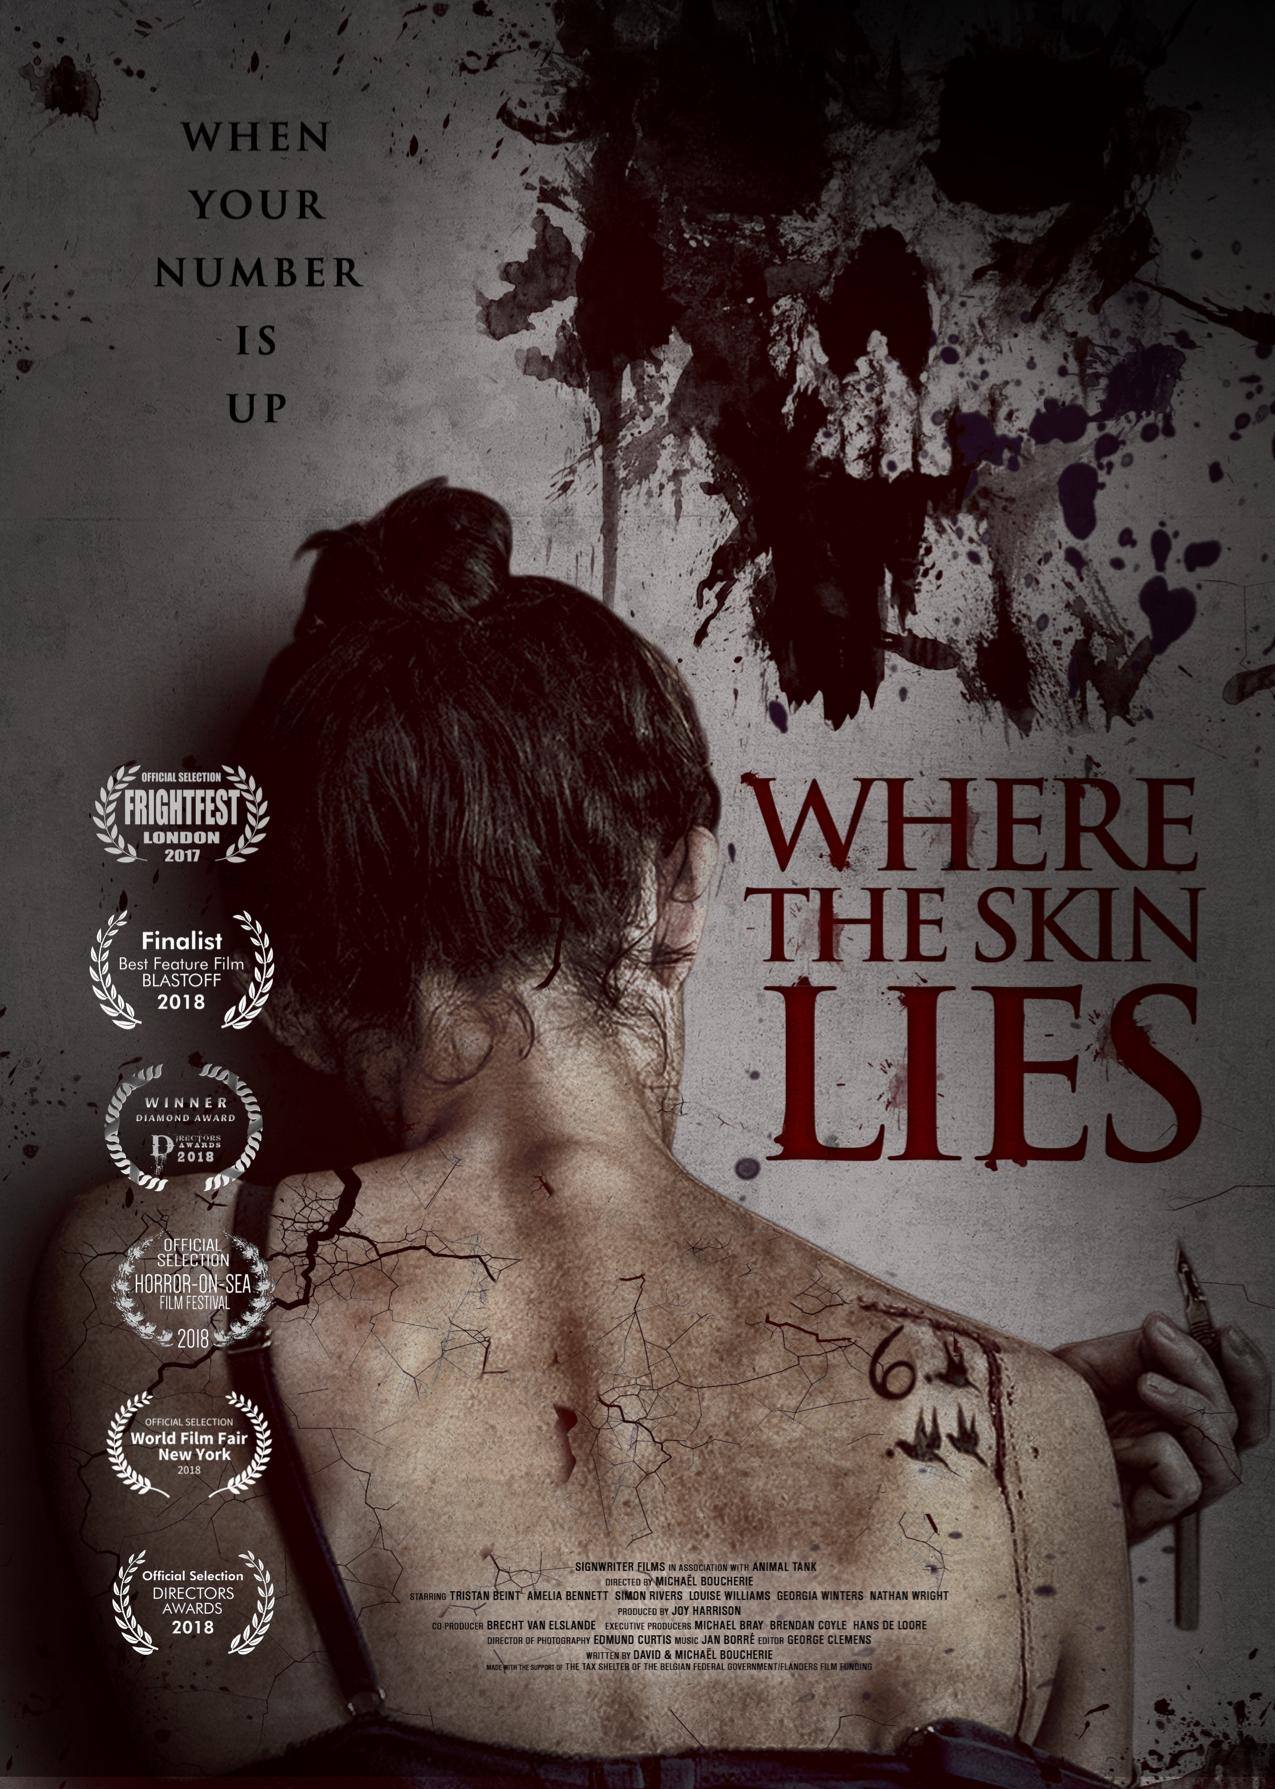 Nonton film Where the Skin Lies layarkaca21 indoxx1 ganool online streaming terbaru